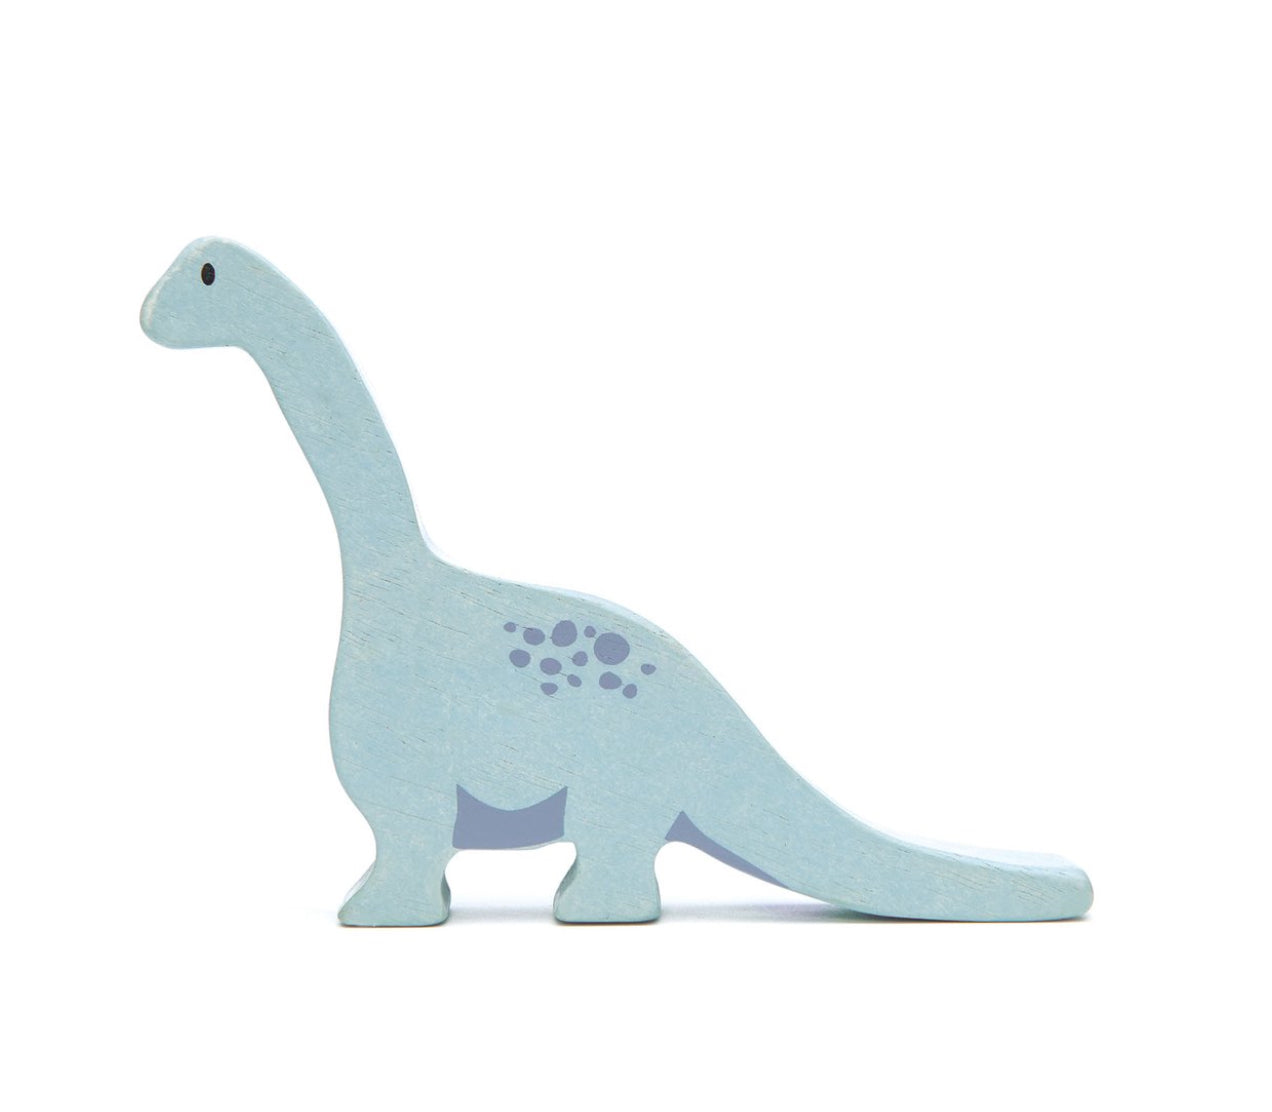 Tender Leaf Toys Brontosaurus  Wooden Dinosaur Toy